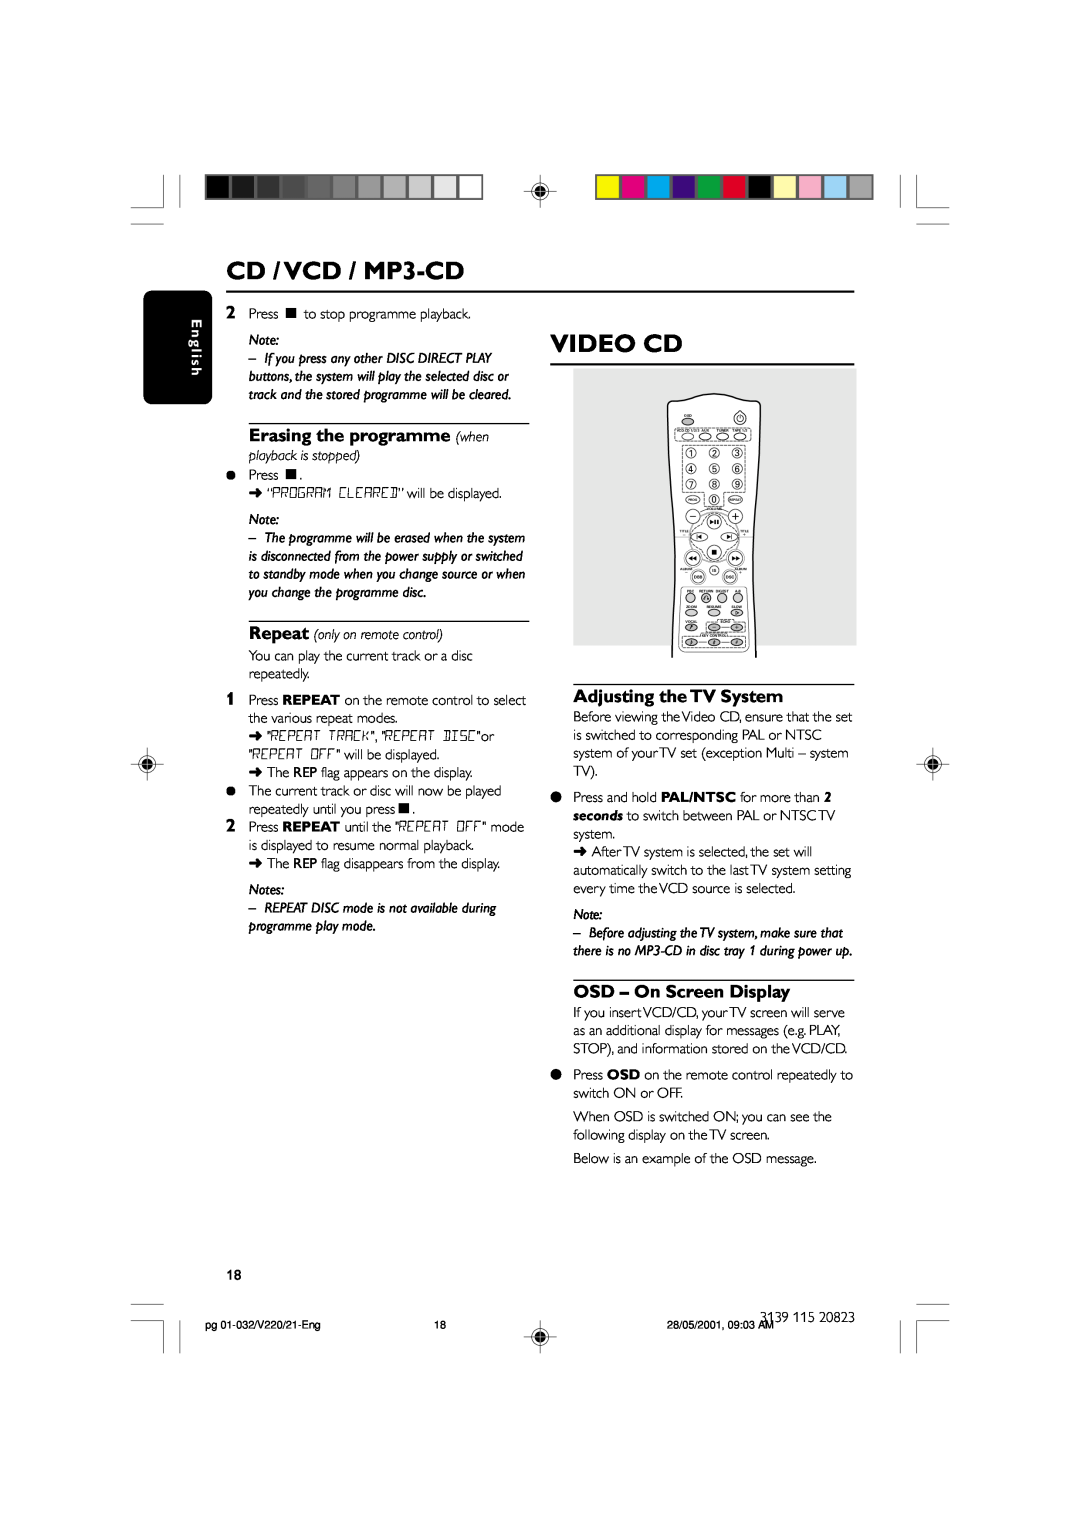 Philips FW-V220/21 manual Video Cd, Erasing the programme when, Adjusting the TV System, OSD – On Screen Display, En gli sh 